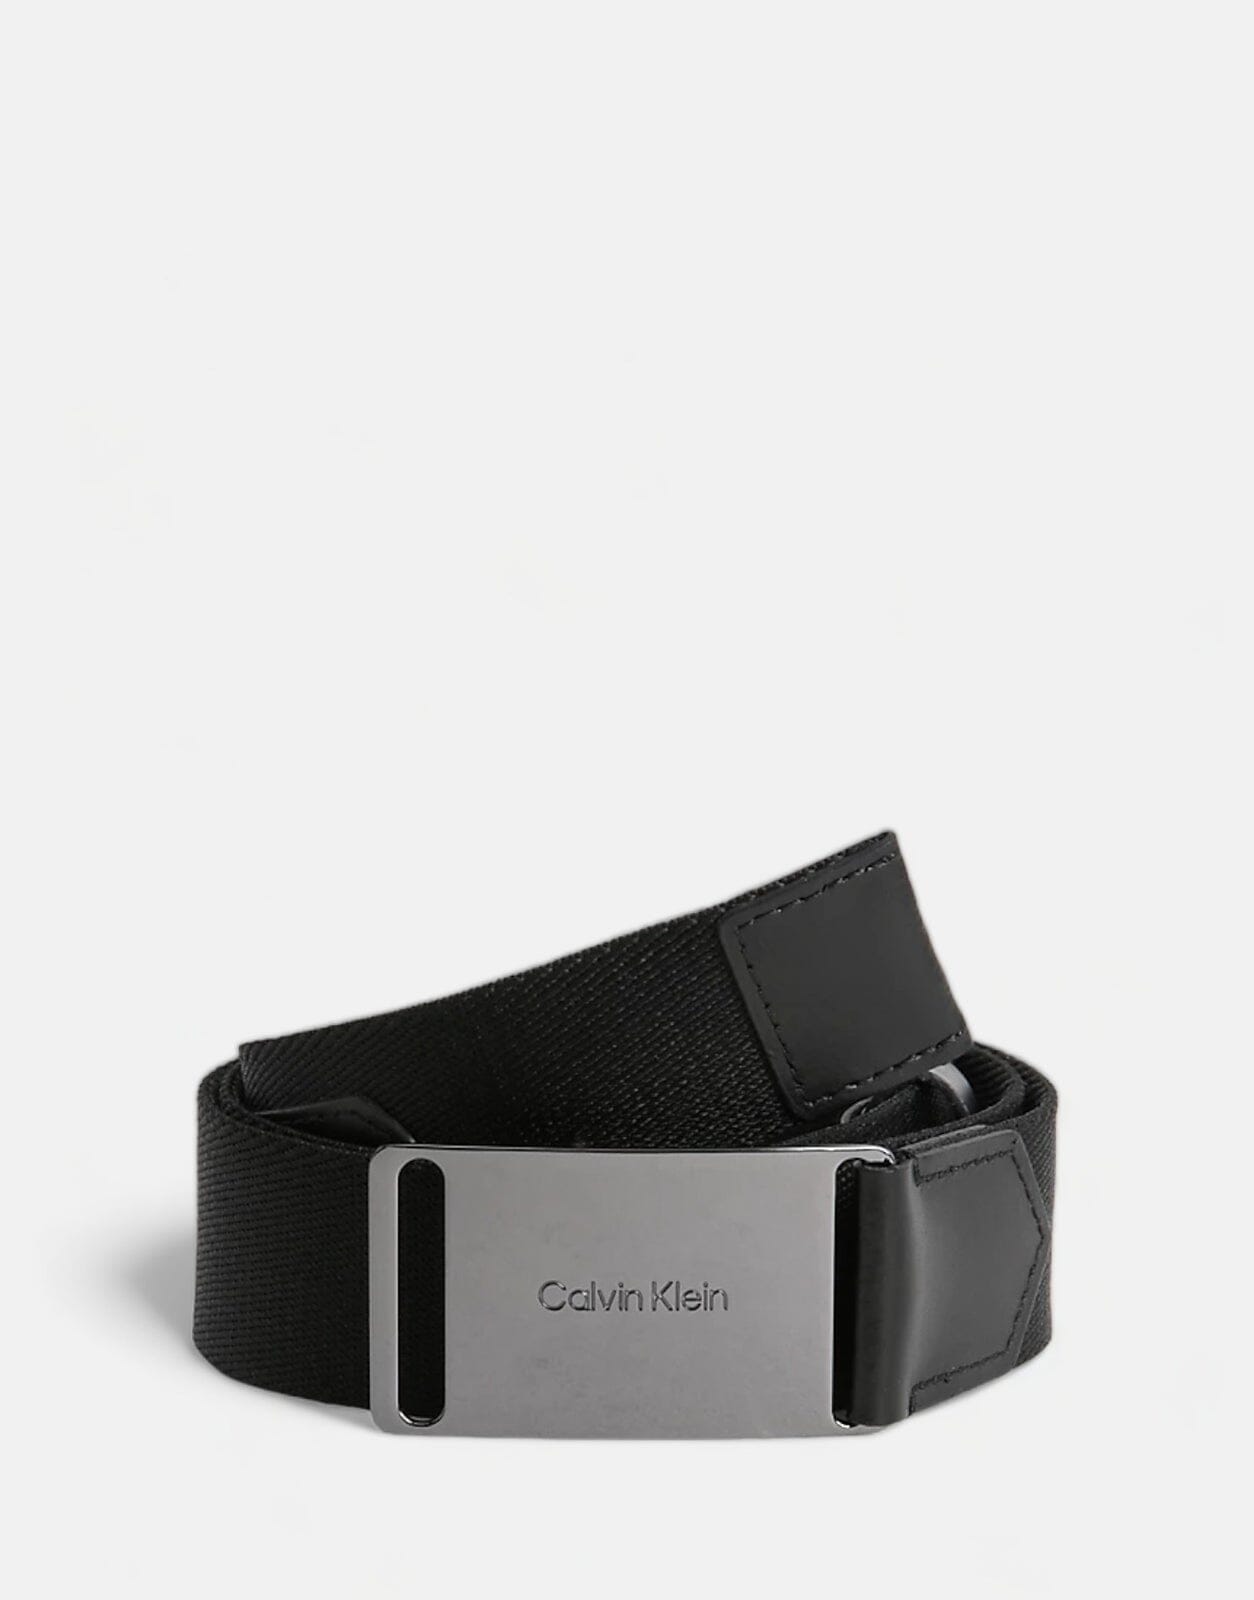 Calvin Klein Plaque Belt 35mm Webbing